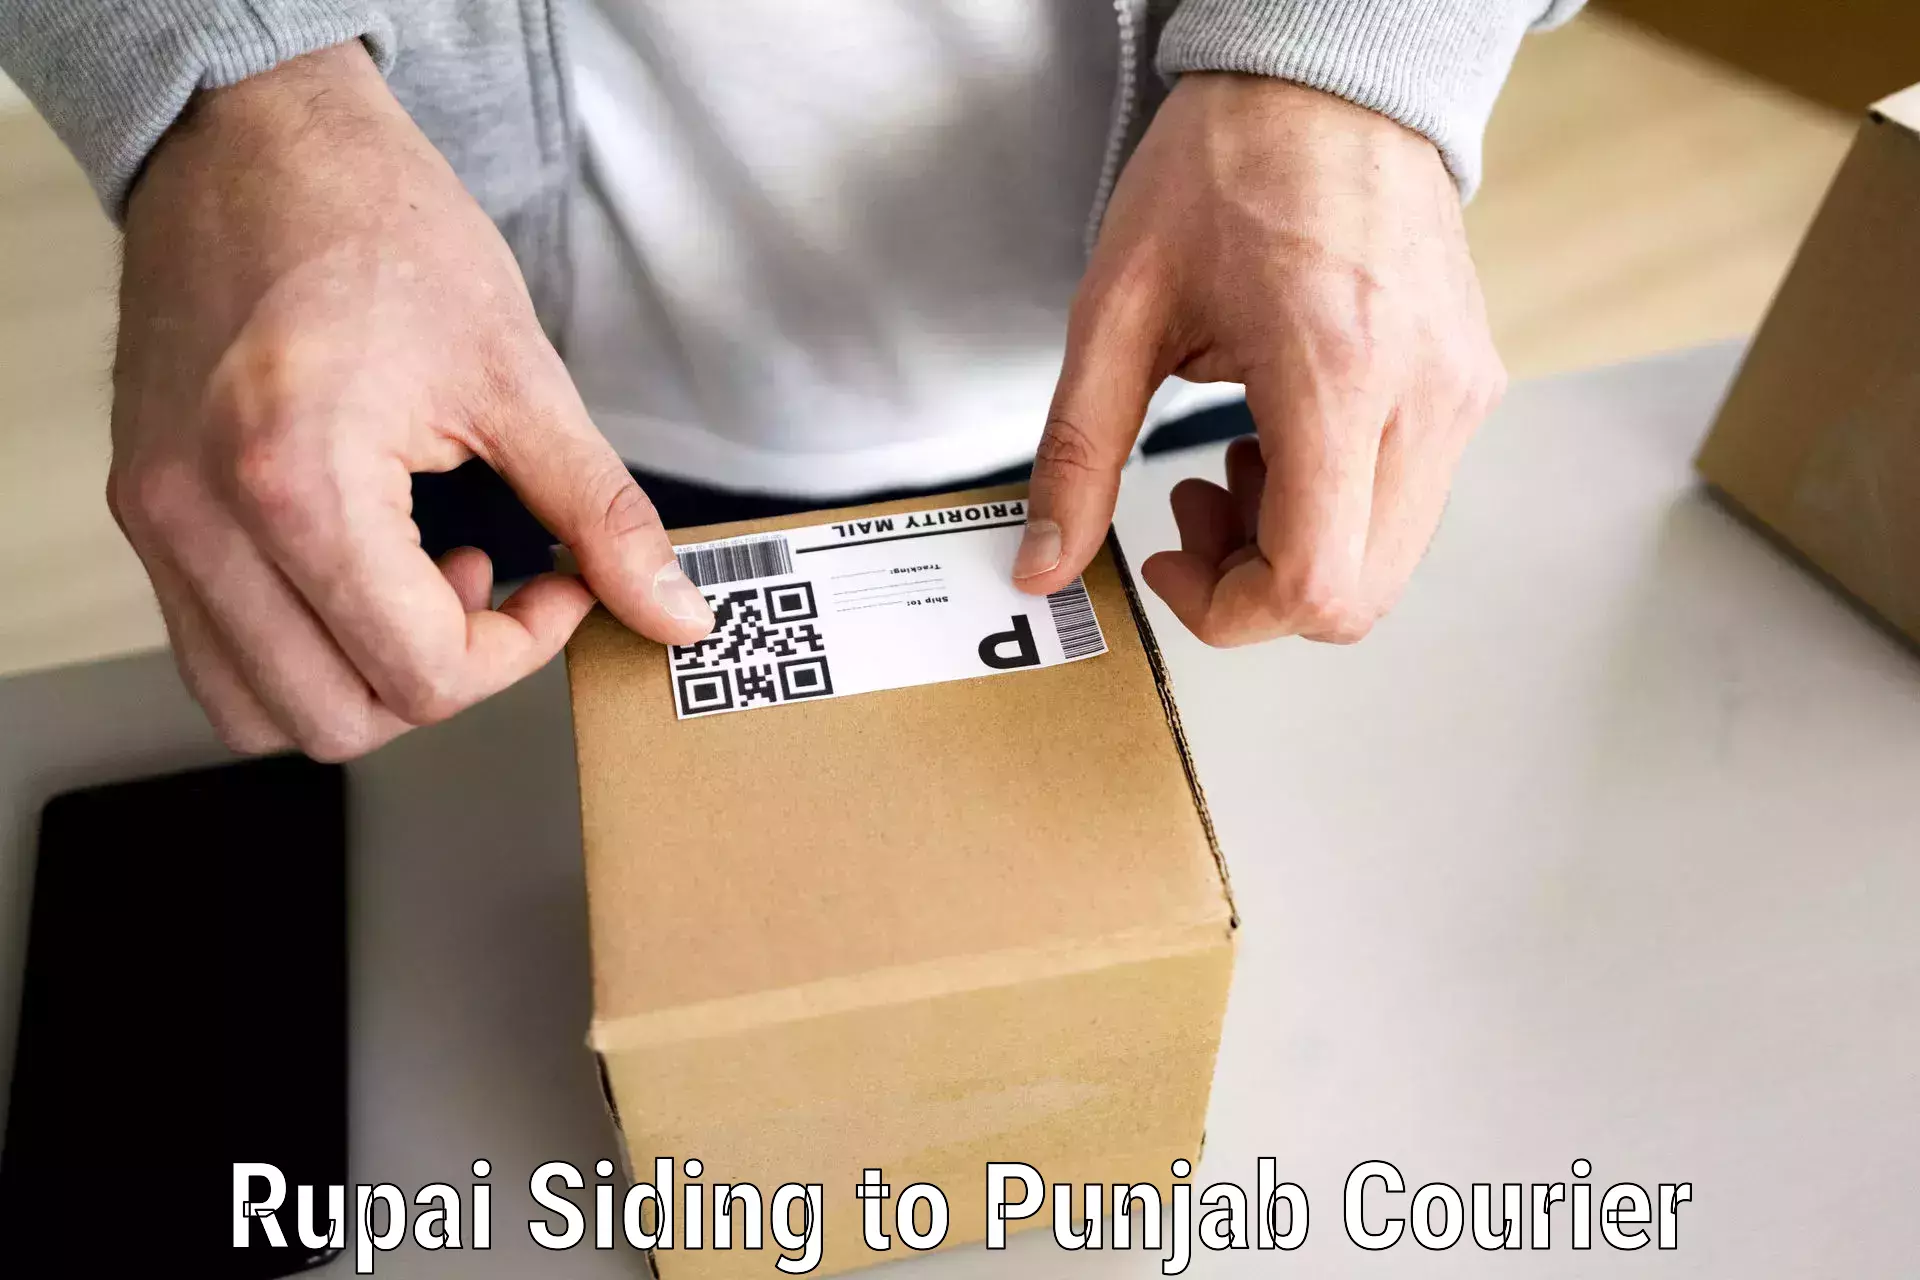 Efficient moving company Rupai Siding to Punjab